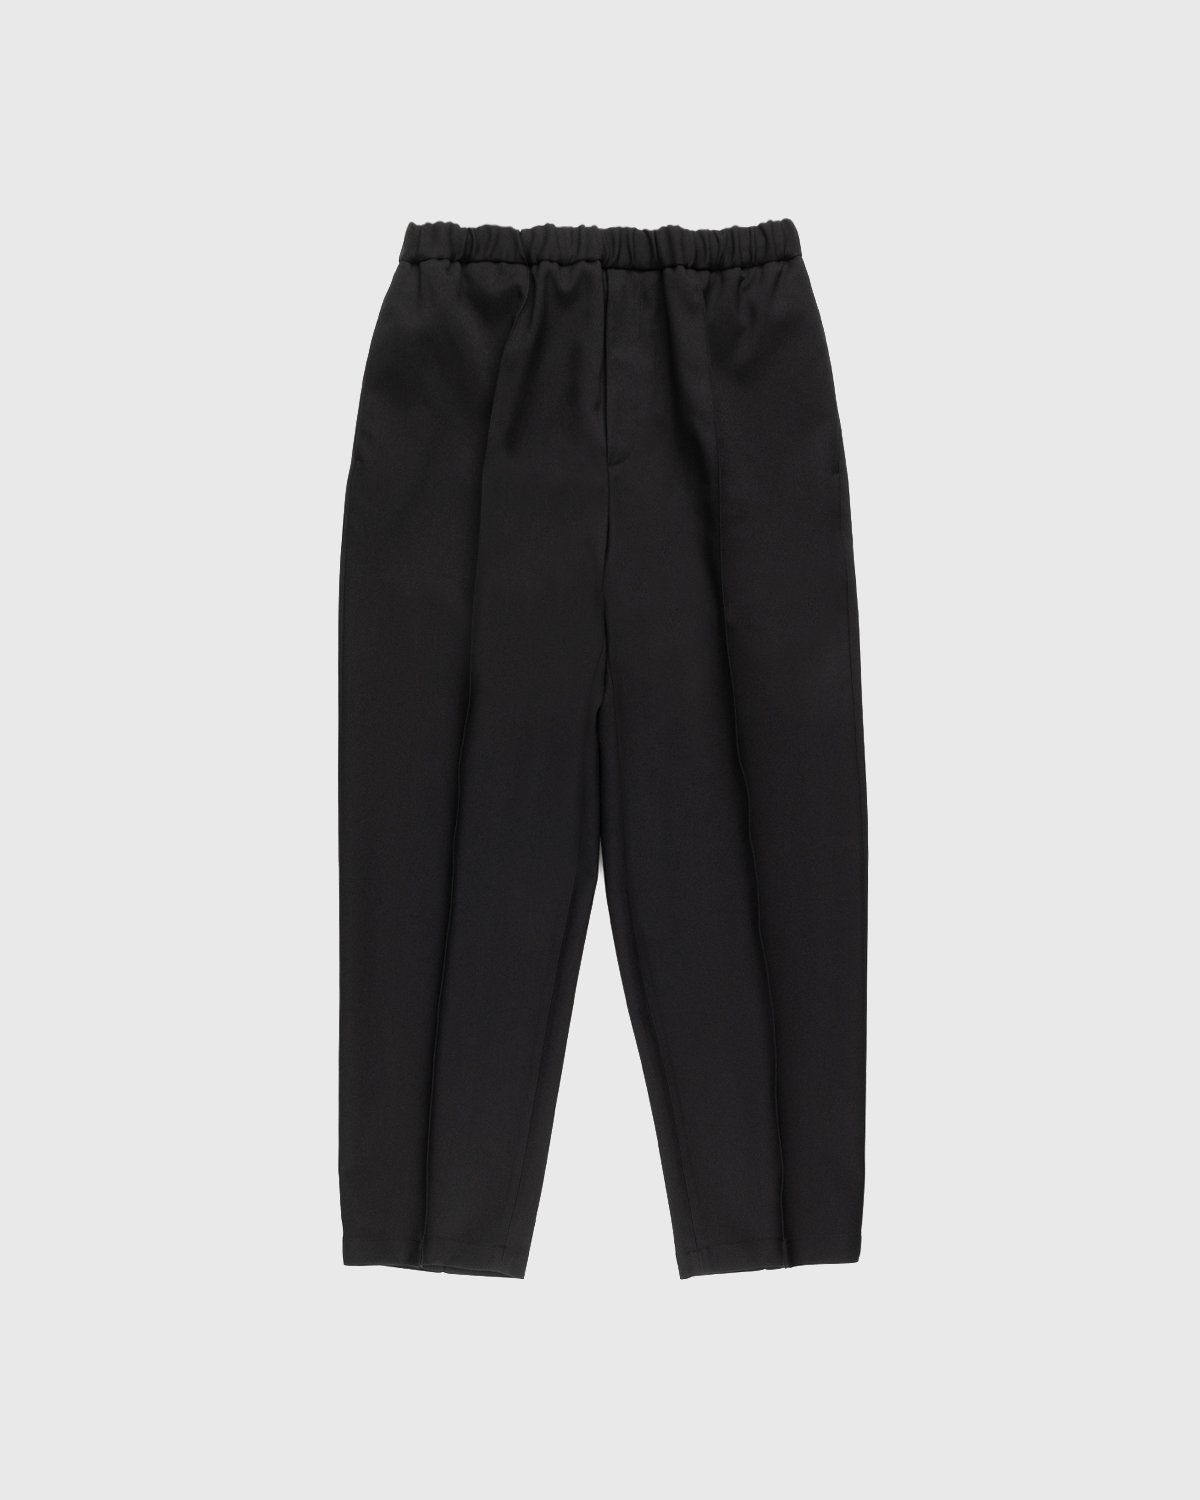 Jil Sander - Trouser D 09 AW 20 Black - Clothing - Black - Image 1